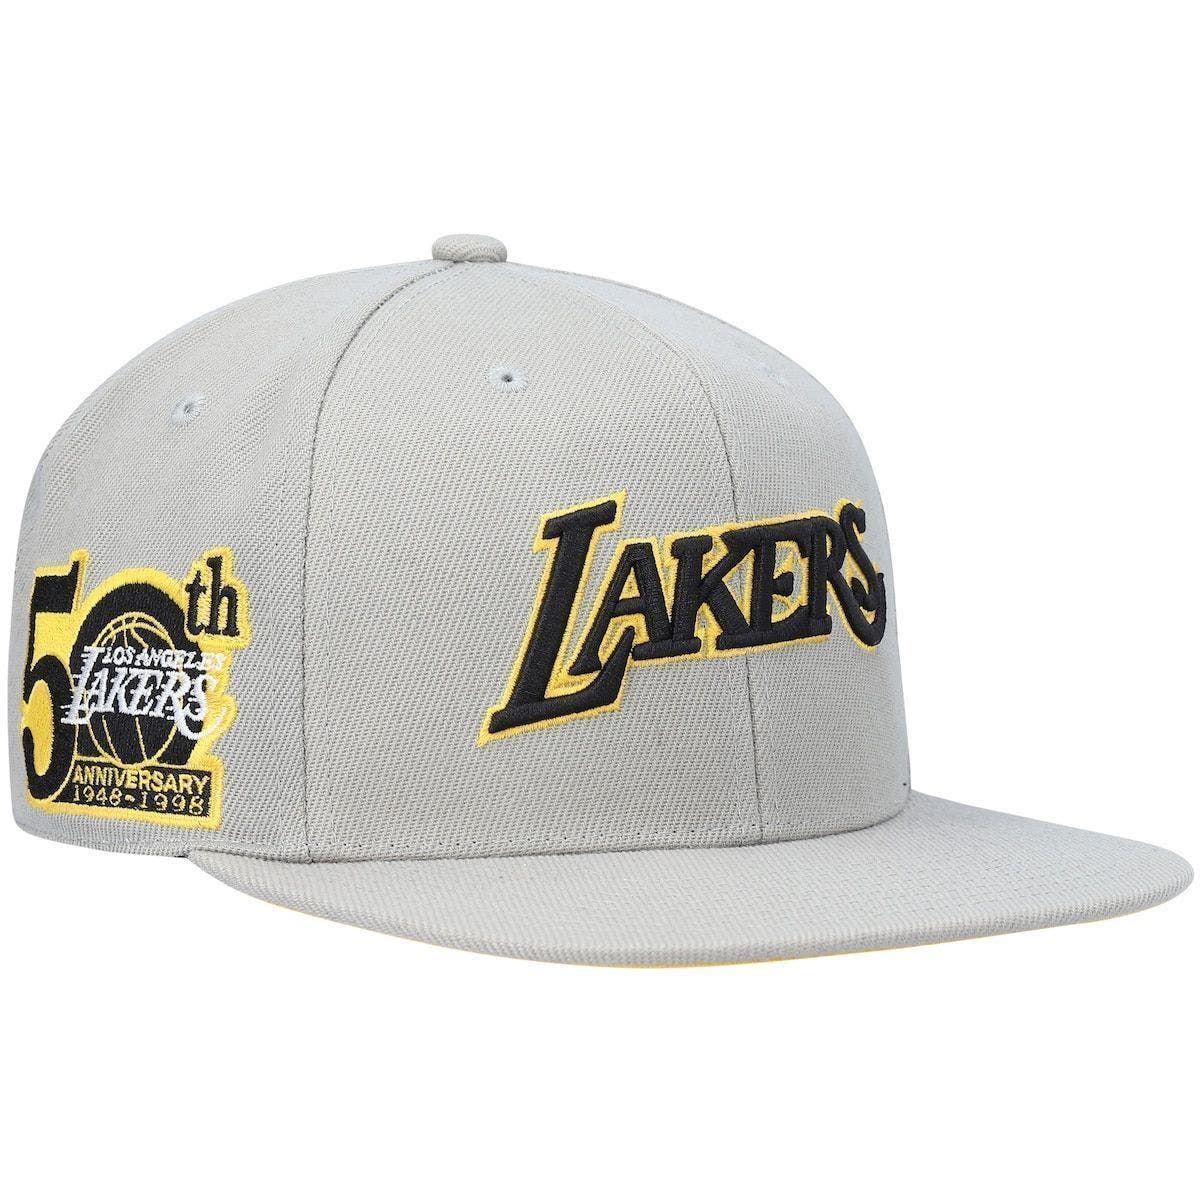 Men's Los Angeles Lakers Mitchell & Ness Purple 50th Anniversary Snapback  Hat